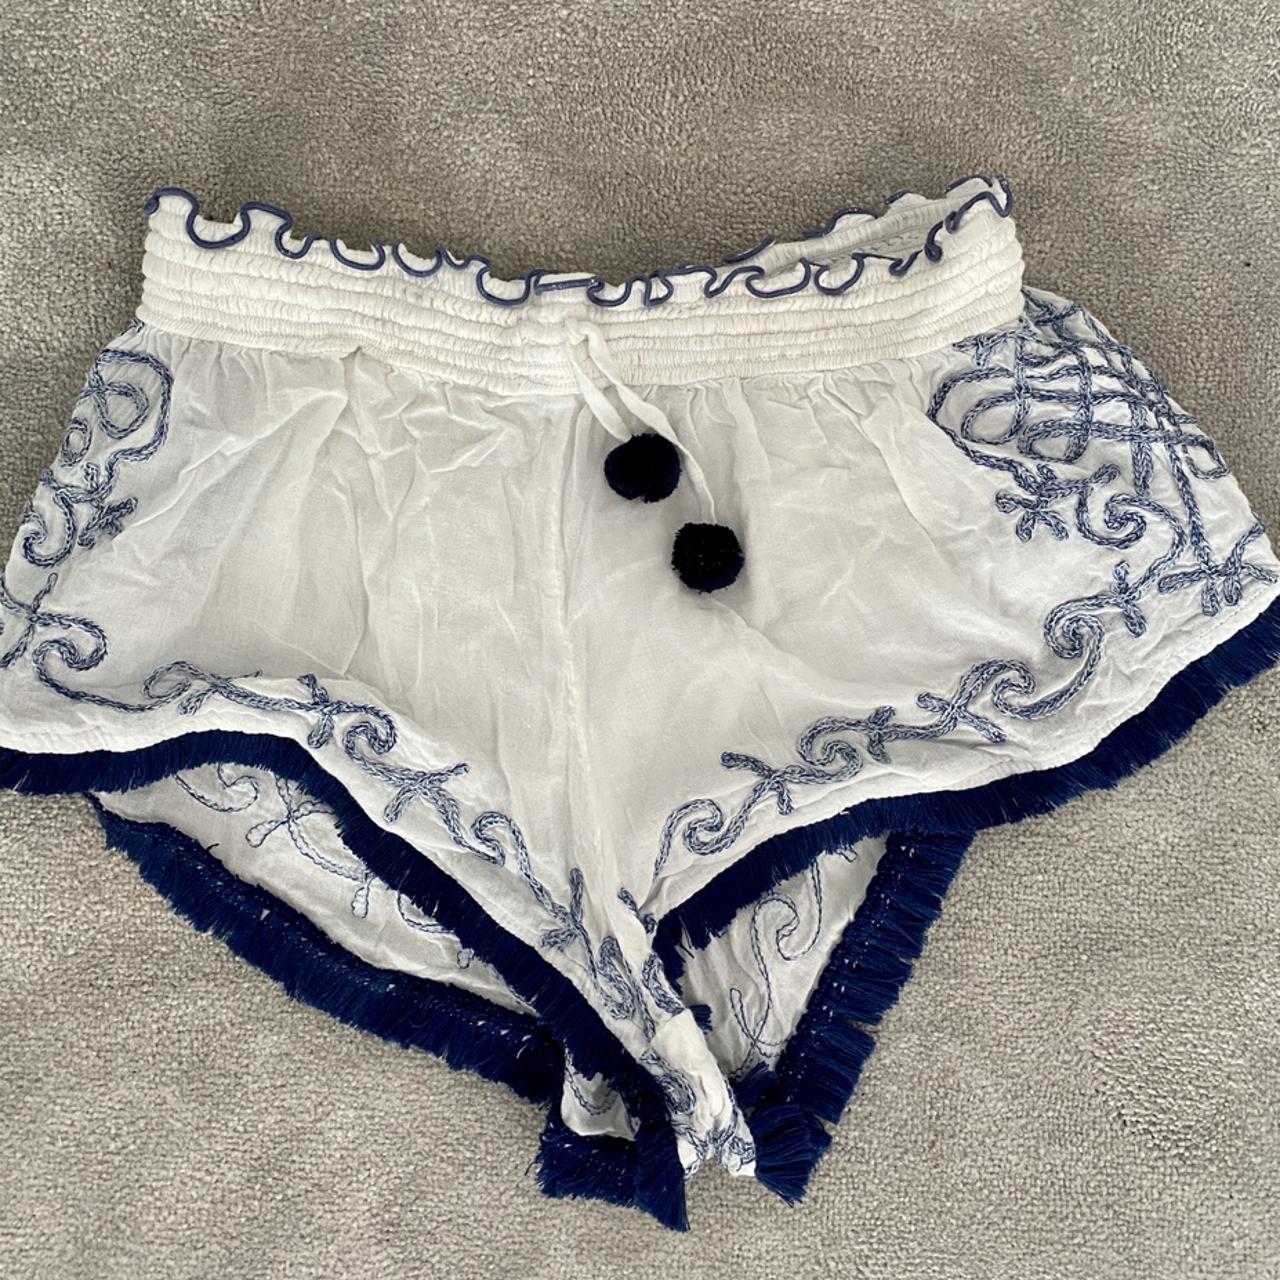 Poupette St Barth Women's White and Blue Shorts (2)